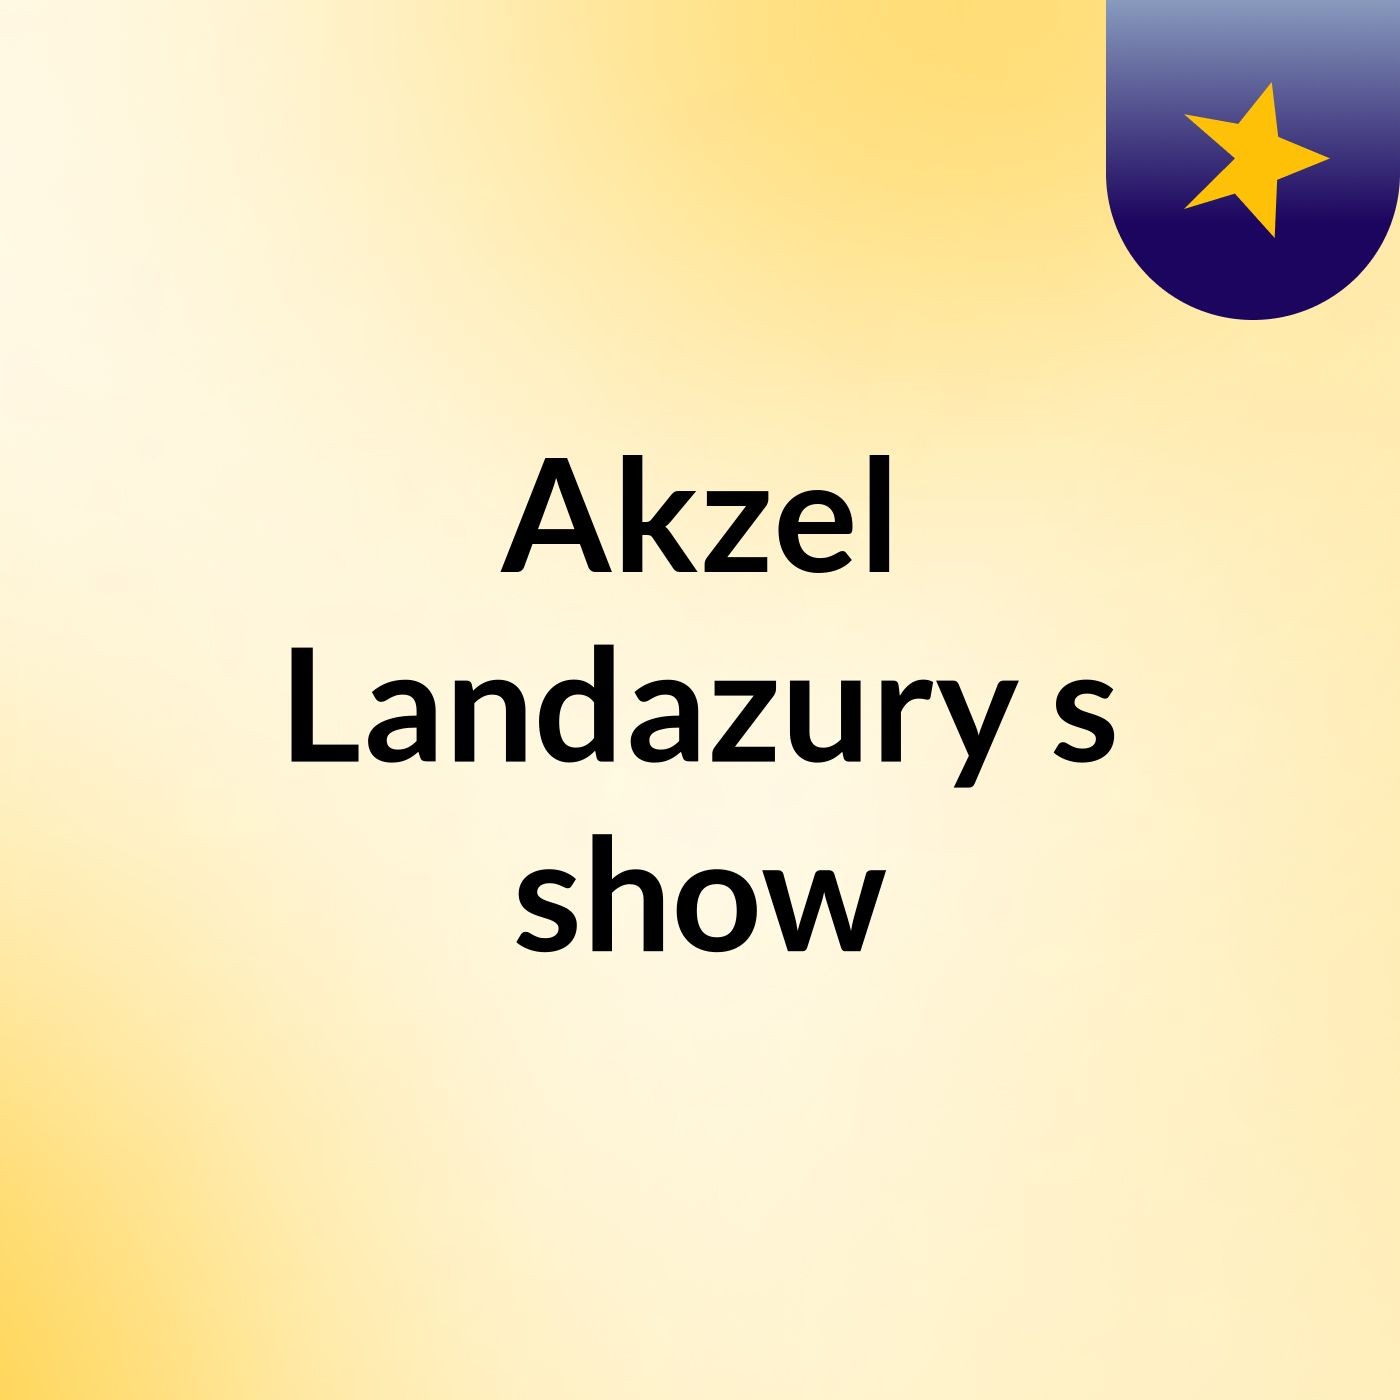 Akzel Landazury's show